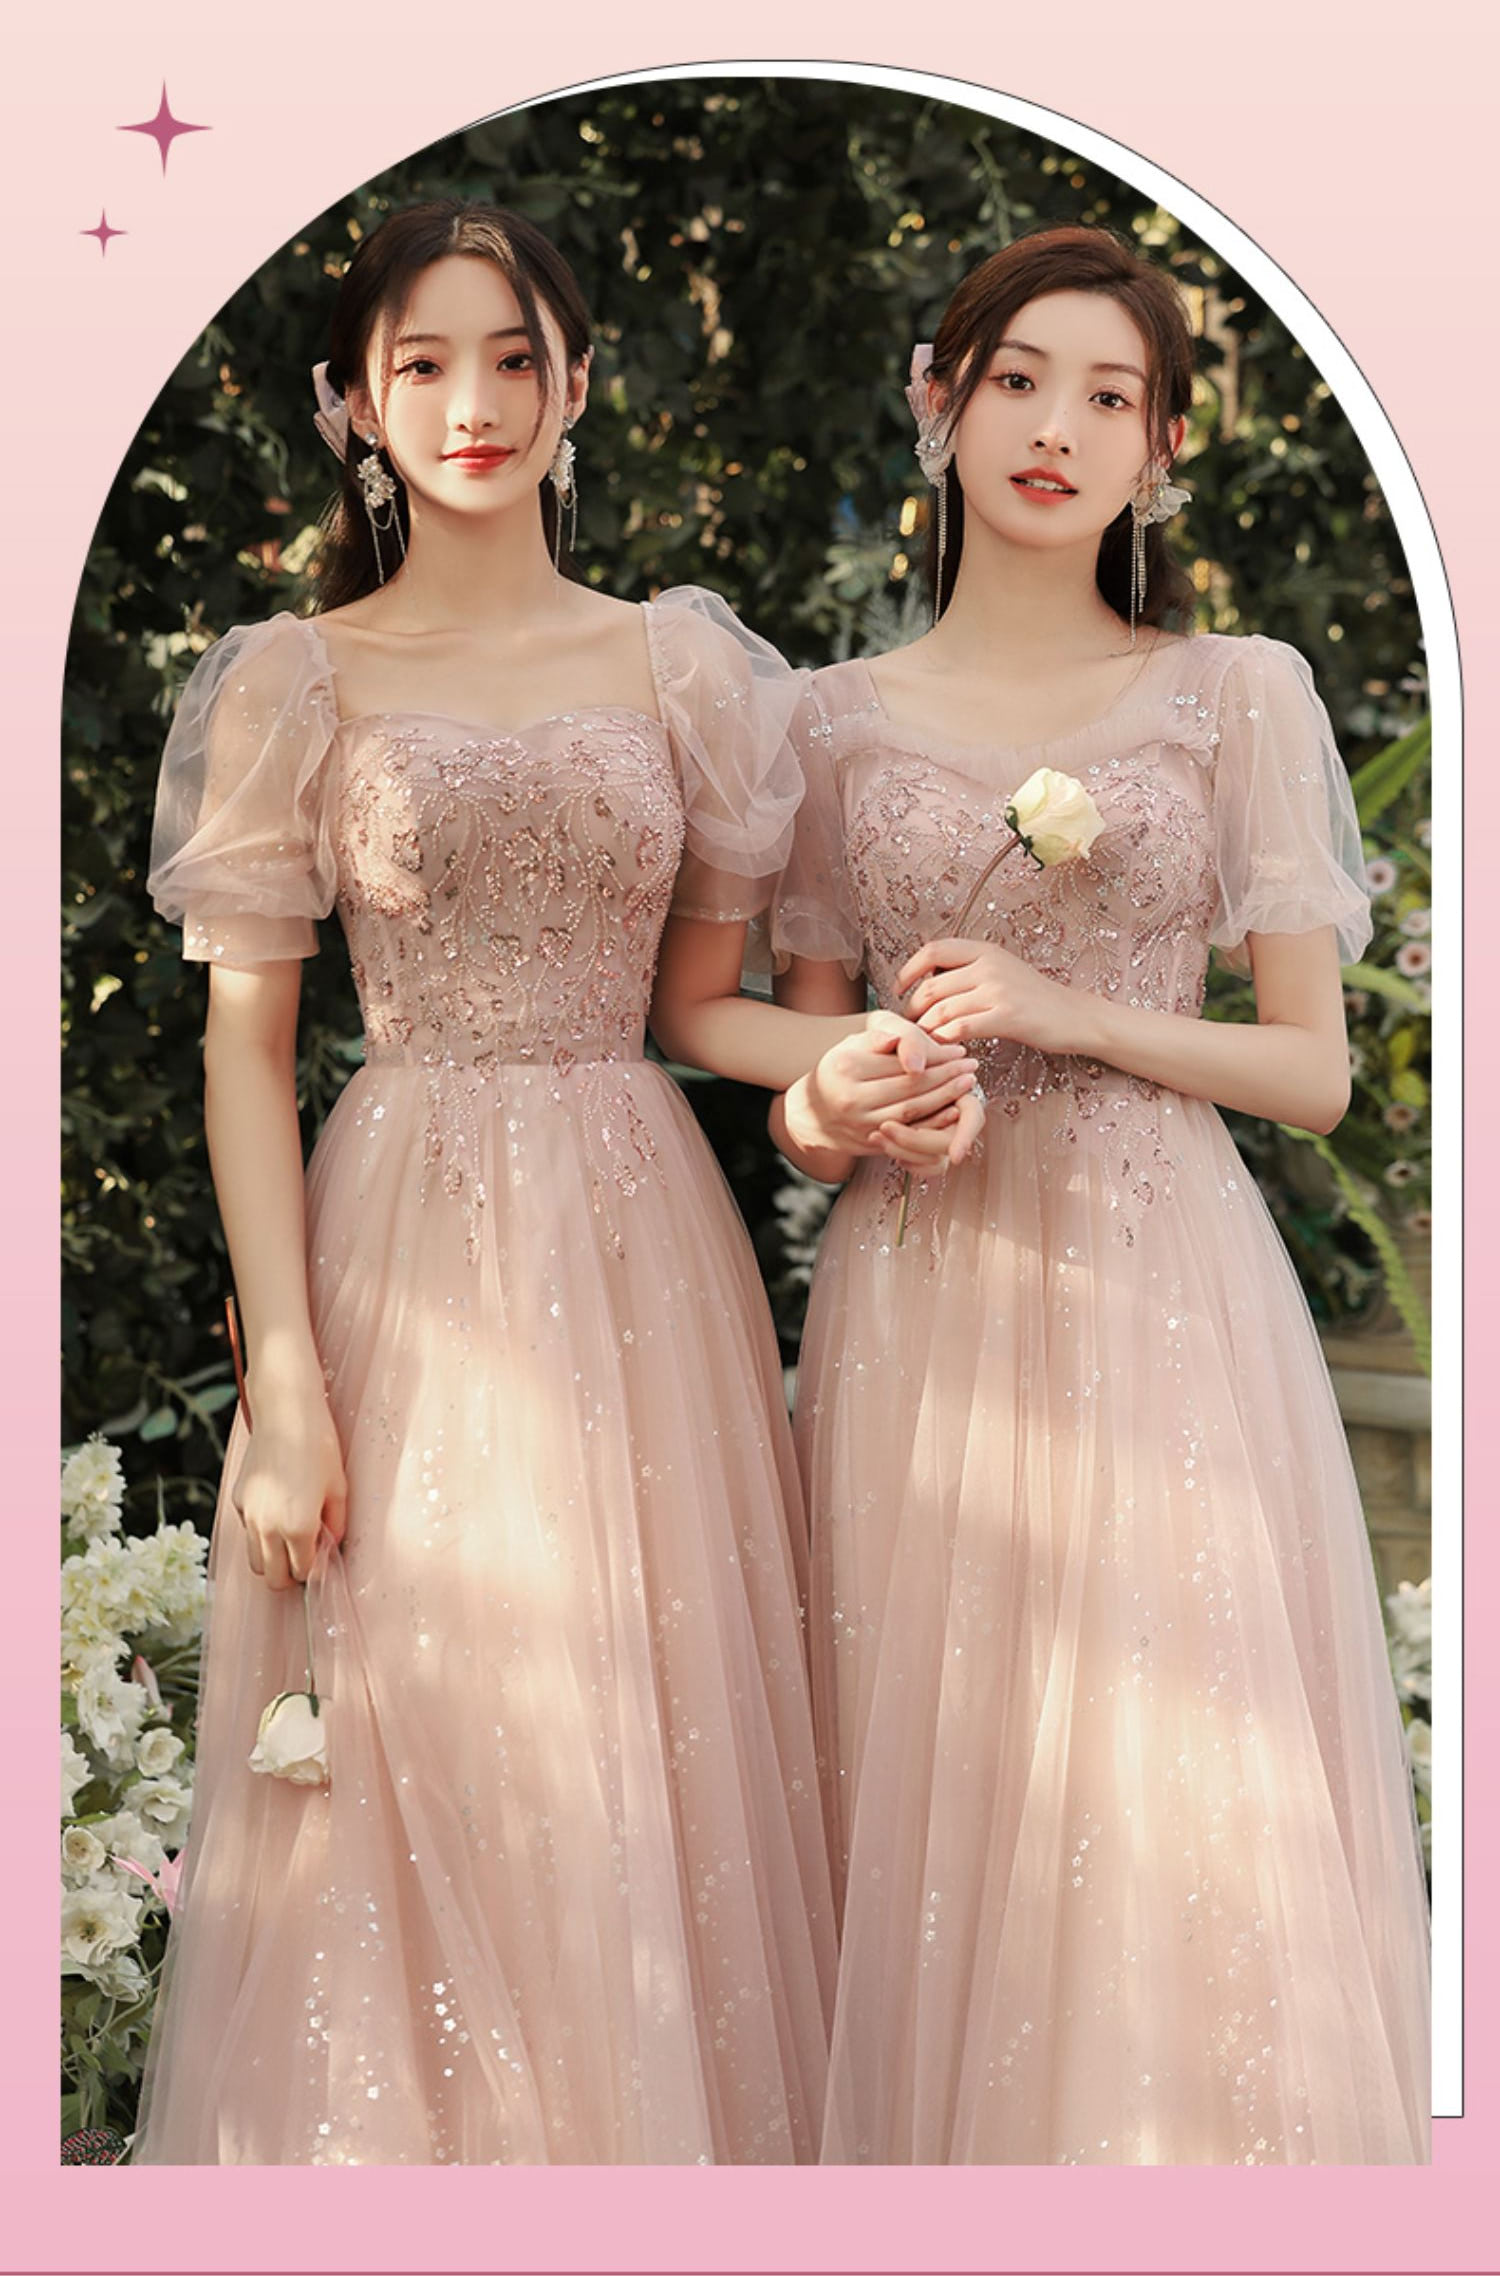 Aesthetic-Pink-Bridal-Wedding-Party-Bridesmaid-Long-Maxi-Dress11.jpg